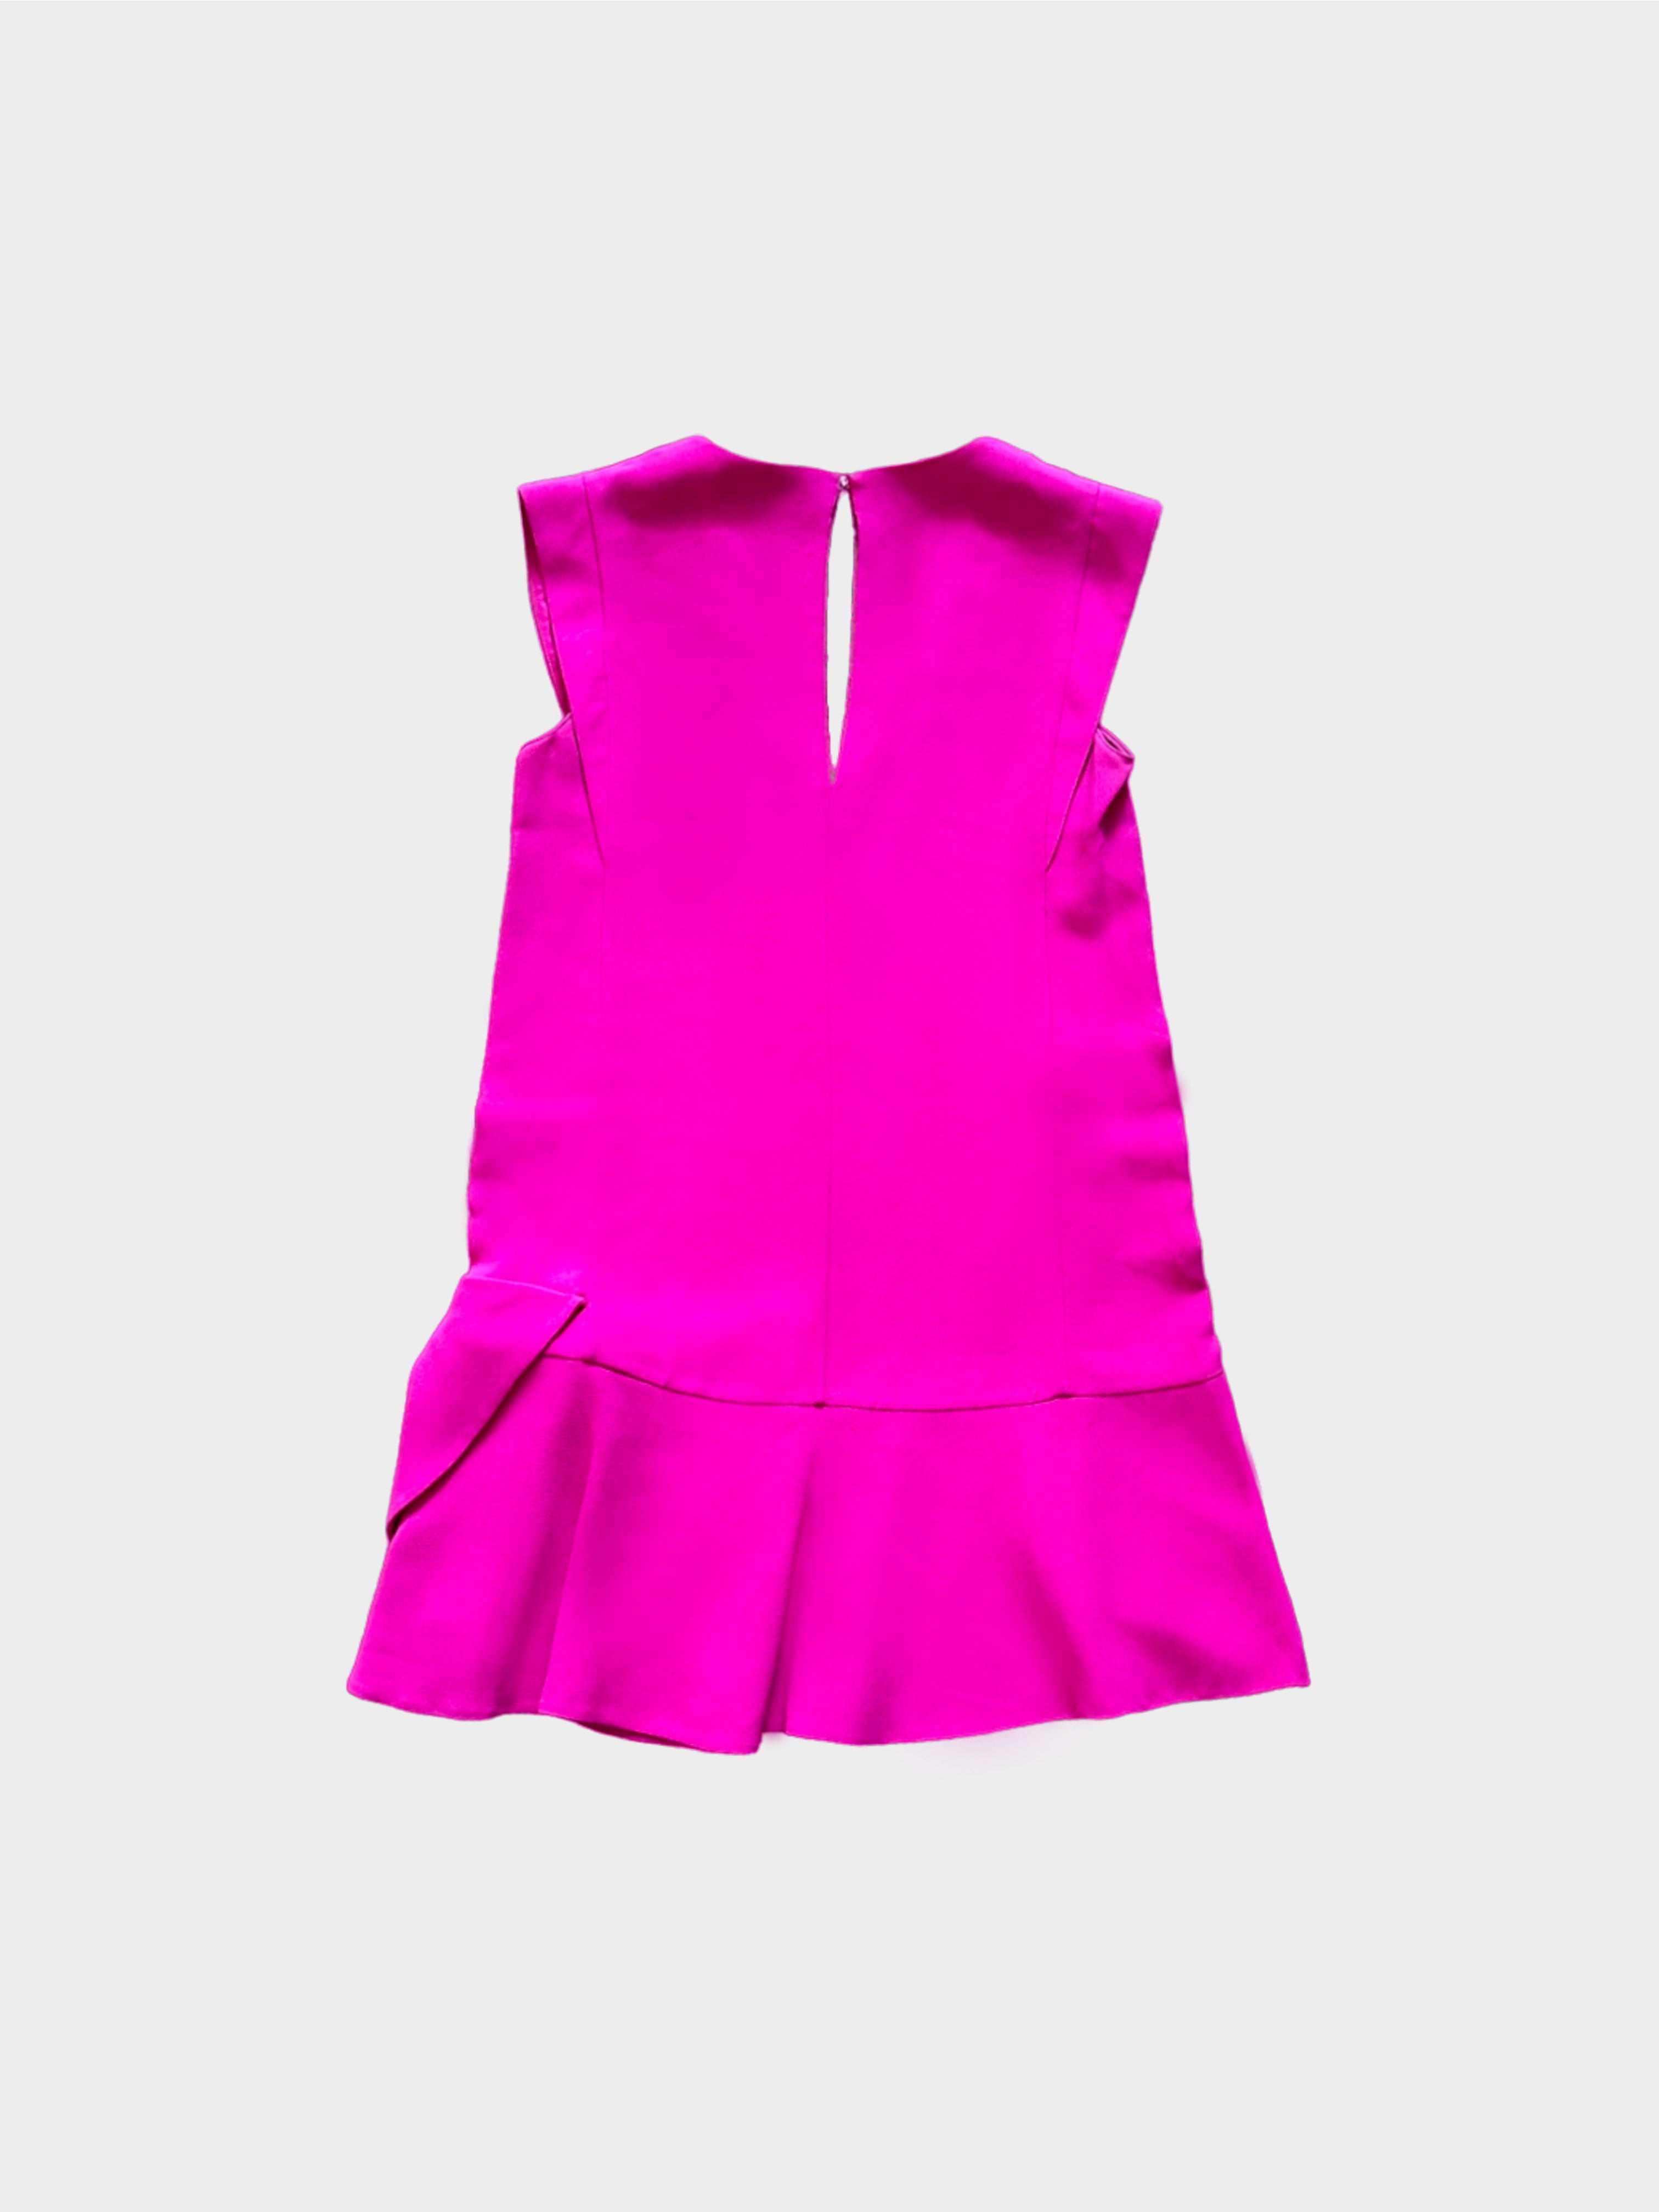 Miu Miu SS 2012 Pink Oversized Ribbon V-Neck Dress